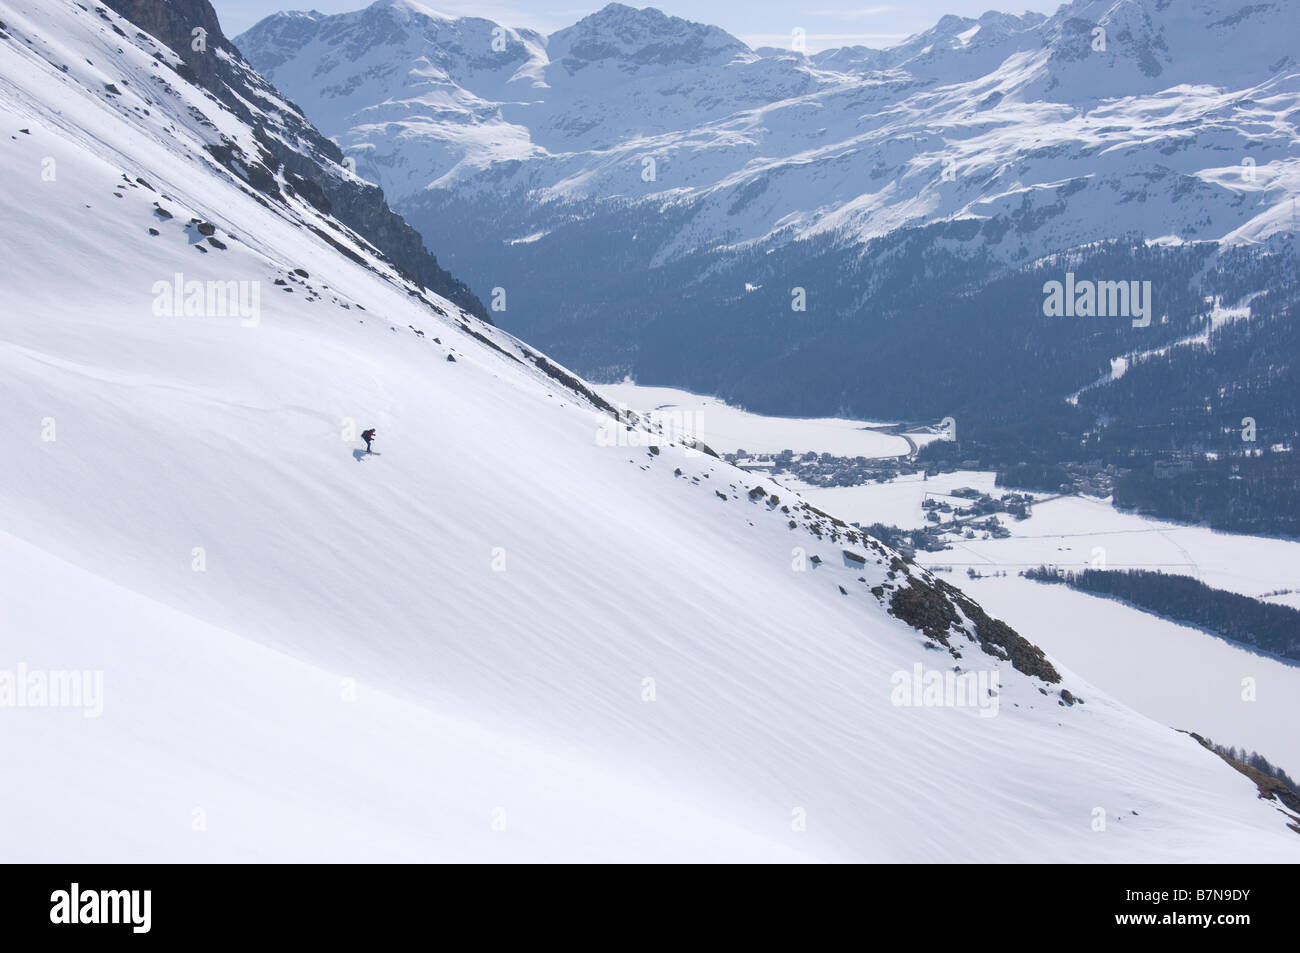 Ski alpinist descends a slope in direction of frozen Lake Sils and Lake Silvaplana. Graubunden, Switzerland Stock Photo